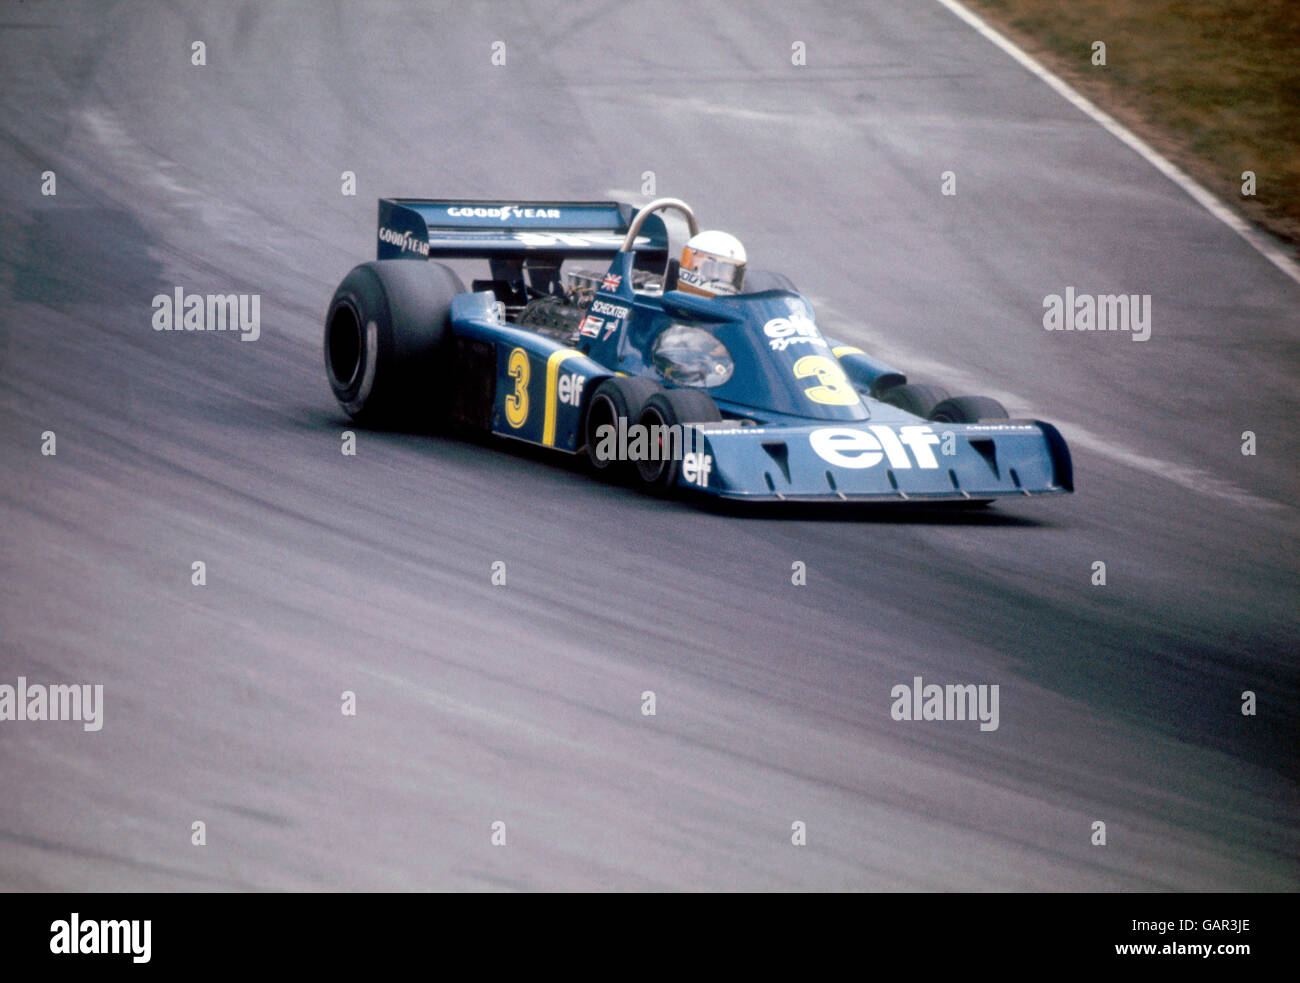 Carreras de Fórmula Uno - Gran Premio de Gran Bretaña. Jody Scheckter conduciendo un Tyrrell de seis ruedas Foto de stock